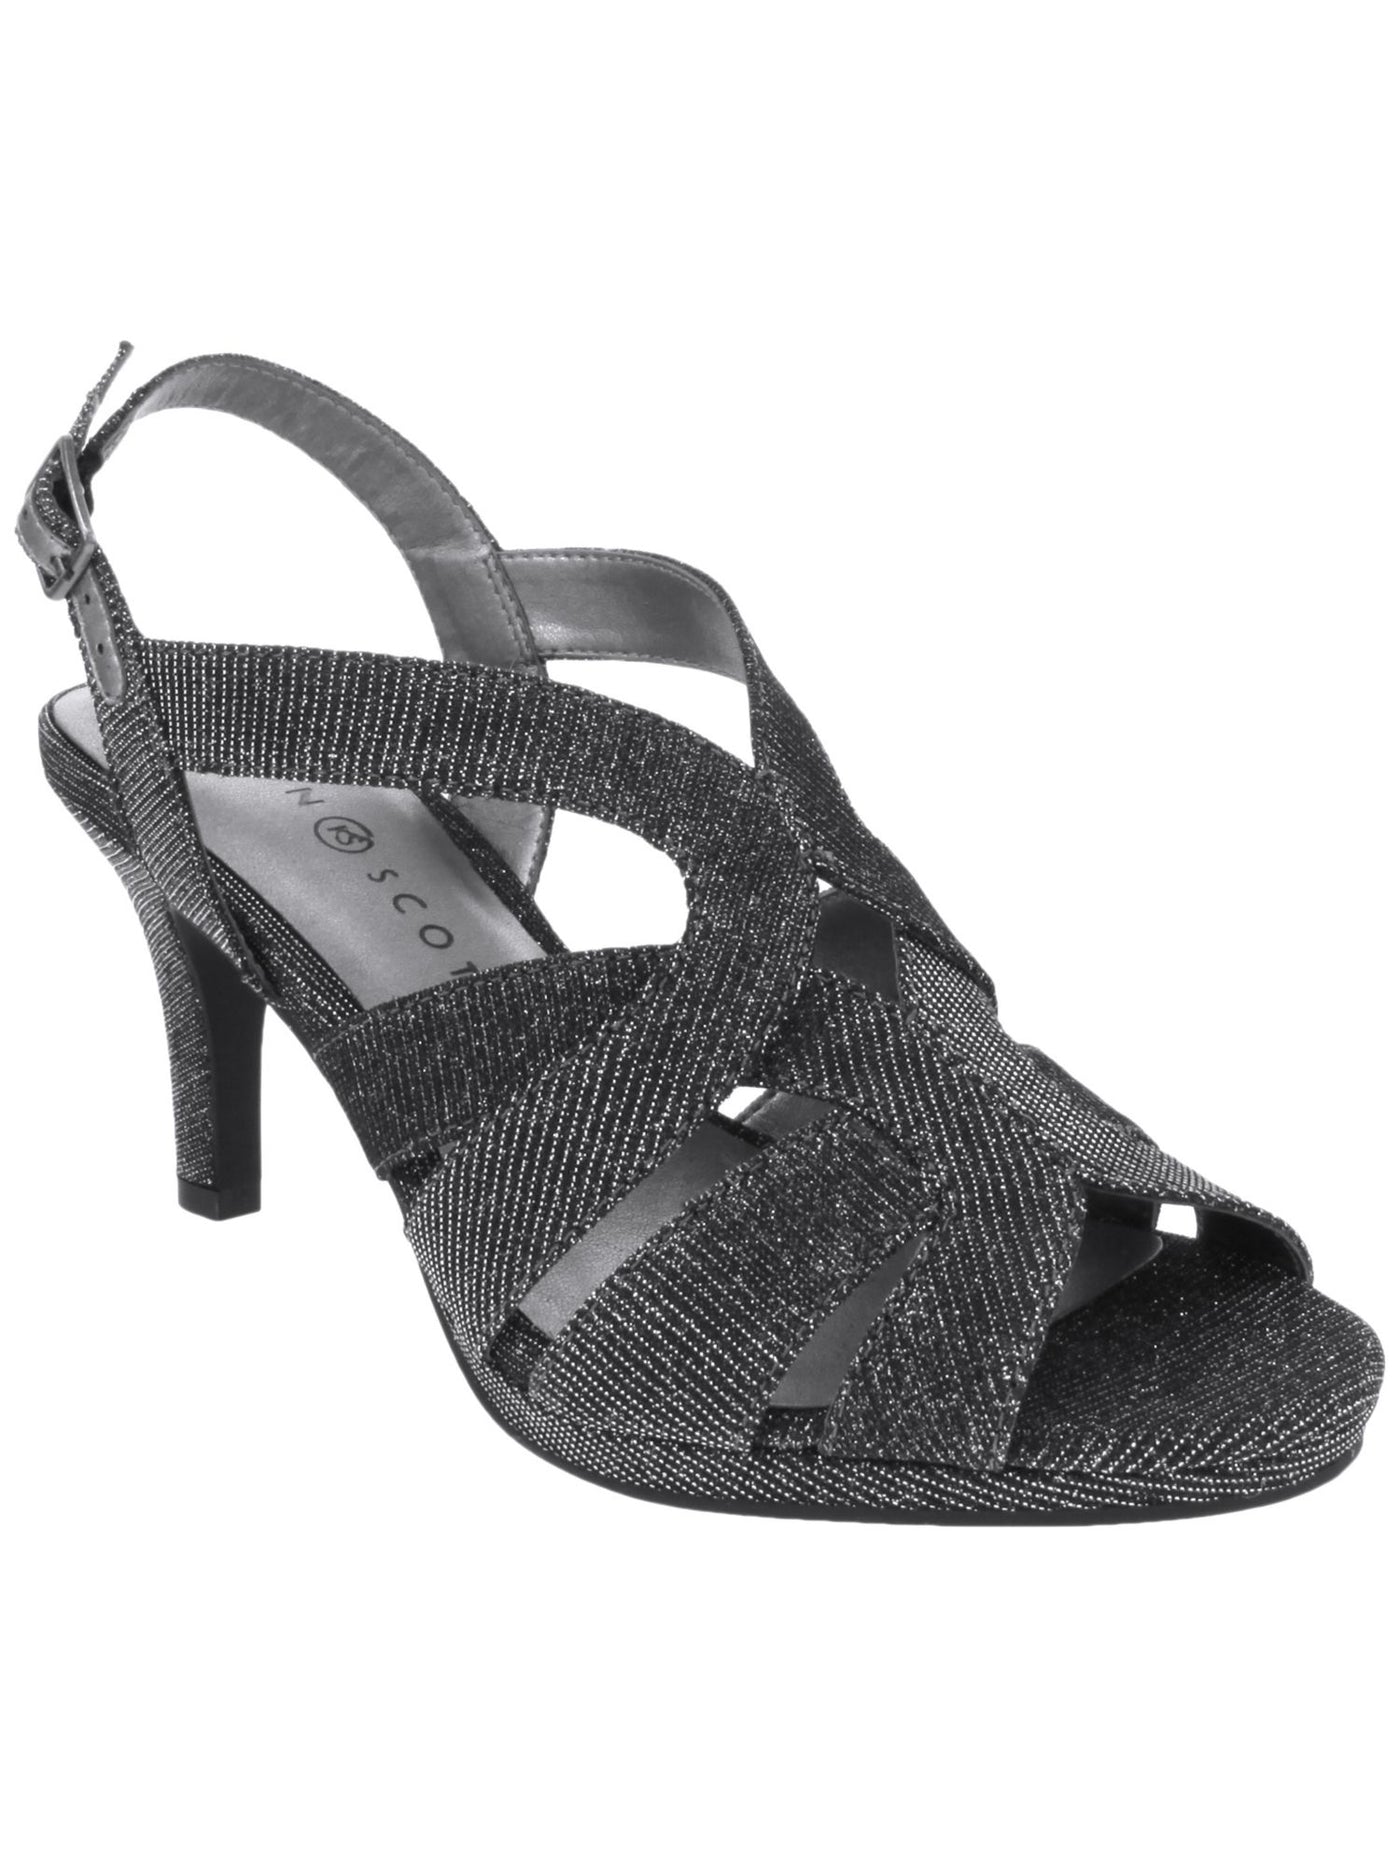 KAREN SCOTT Womens Gray Glitter Cushioned Belindah Peep Toe Stiletto Buckle Dress Sandals Shoes 5 M